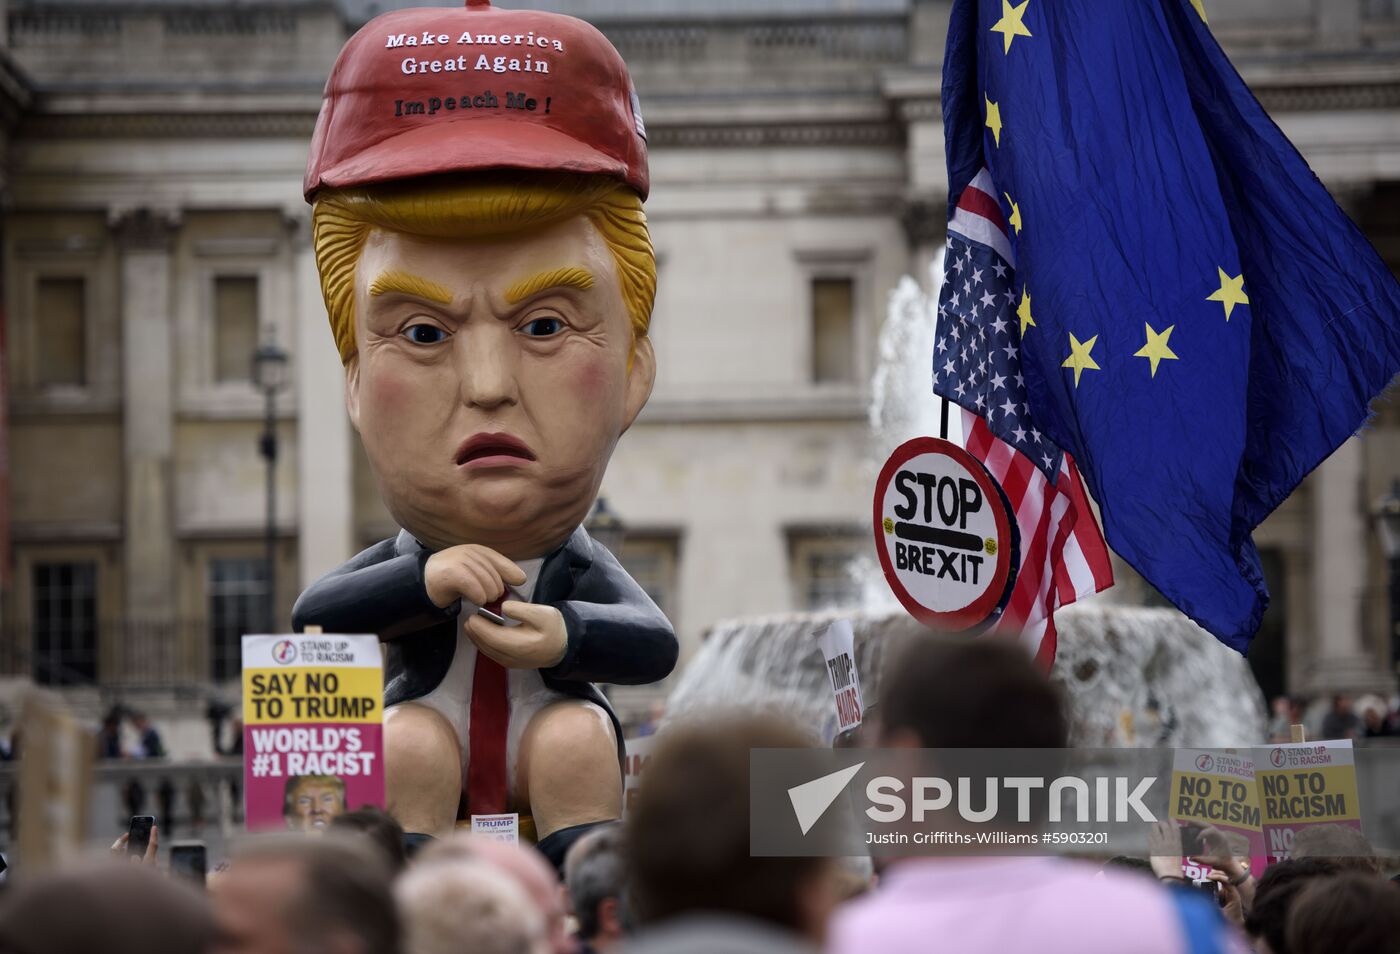 Great Britain Trump Protests